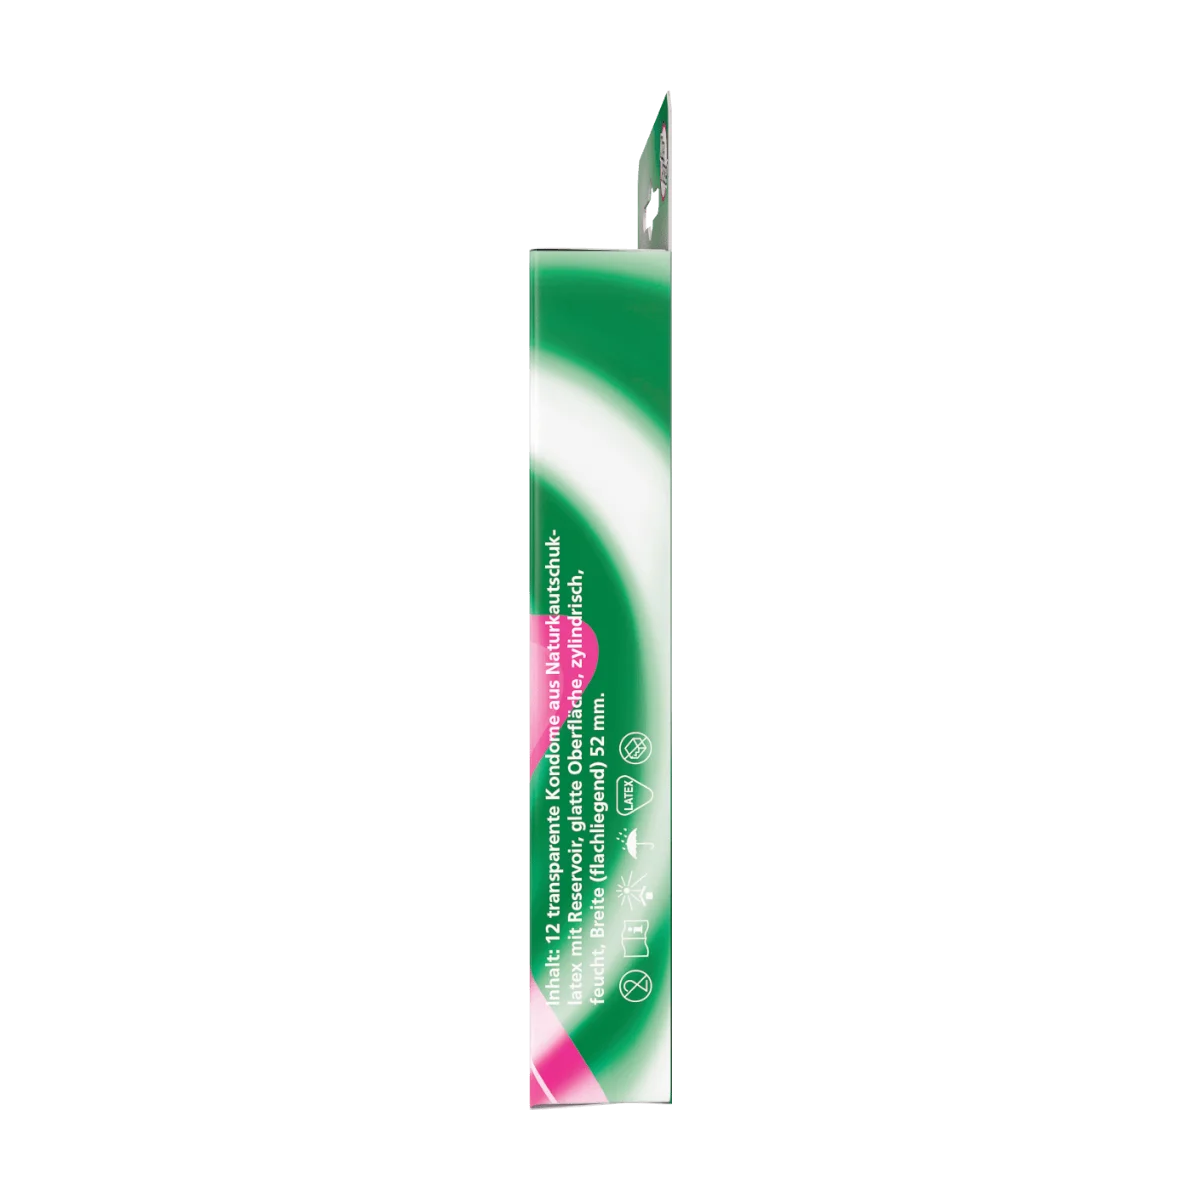 Chaps Kondome Classic Natur, Breite 52mm, 12 Stk